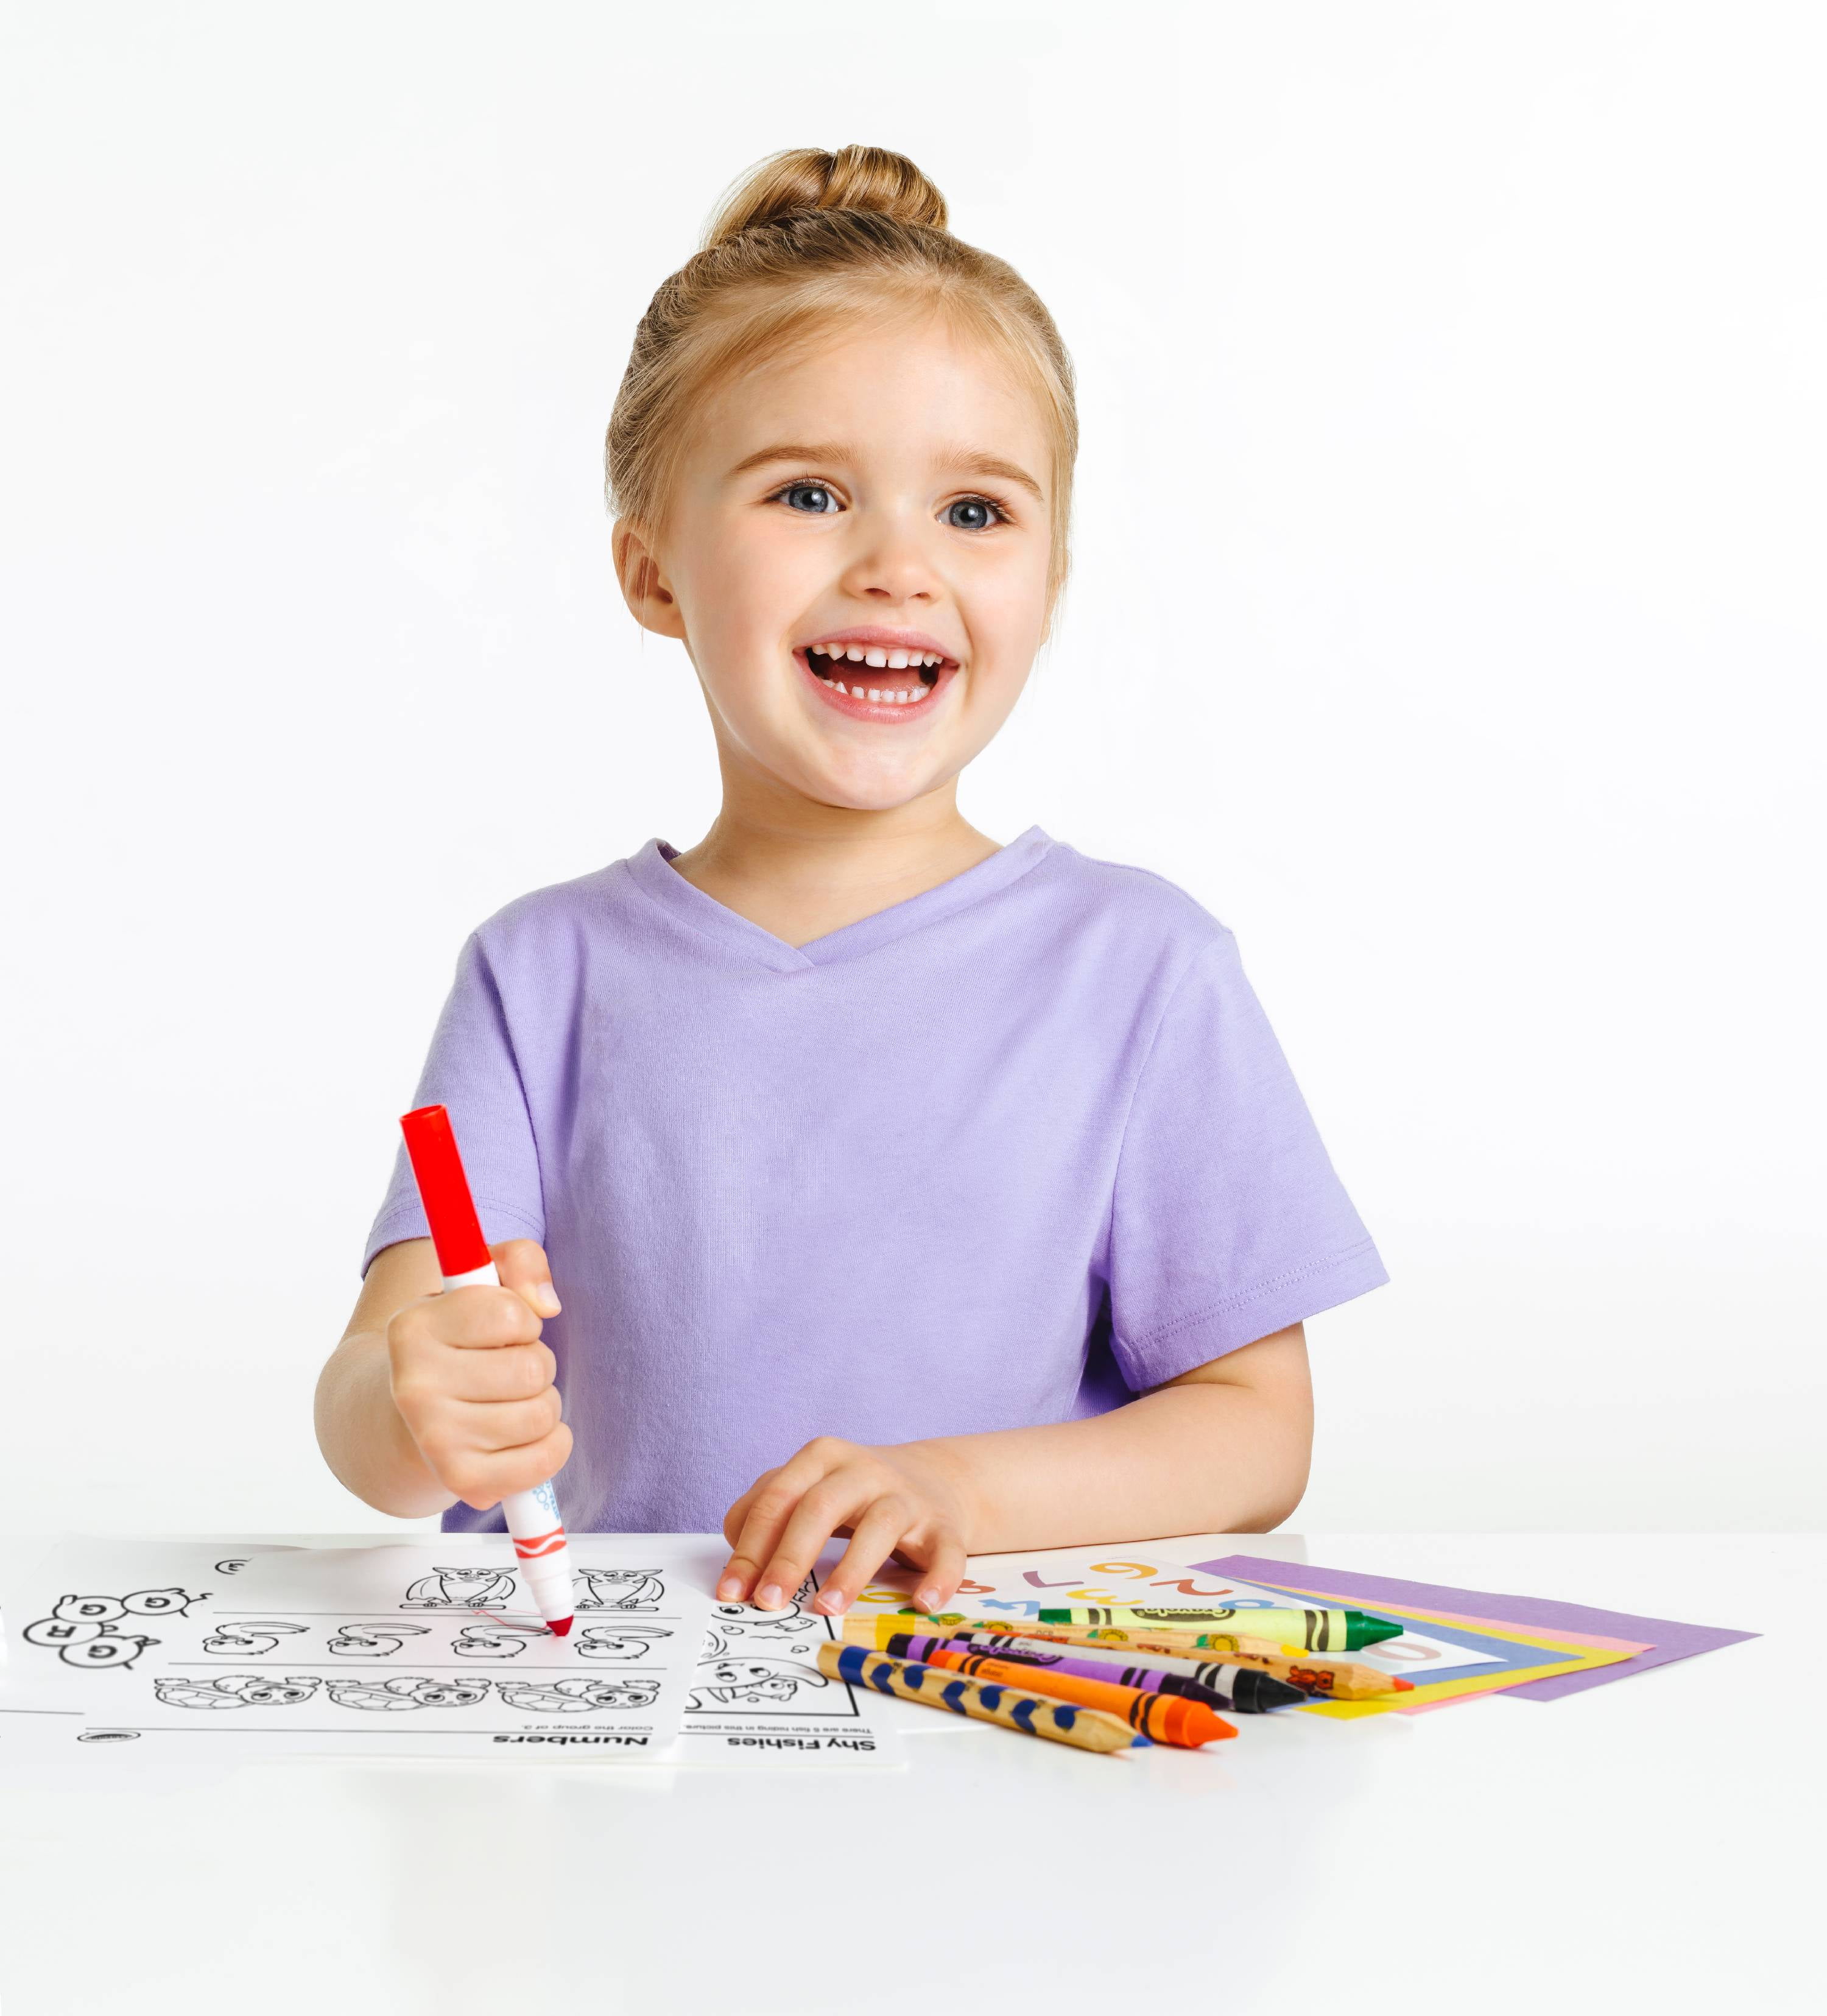 Crayola My First Preschool Readiness Kit – Mini Ruby